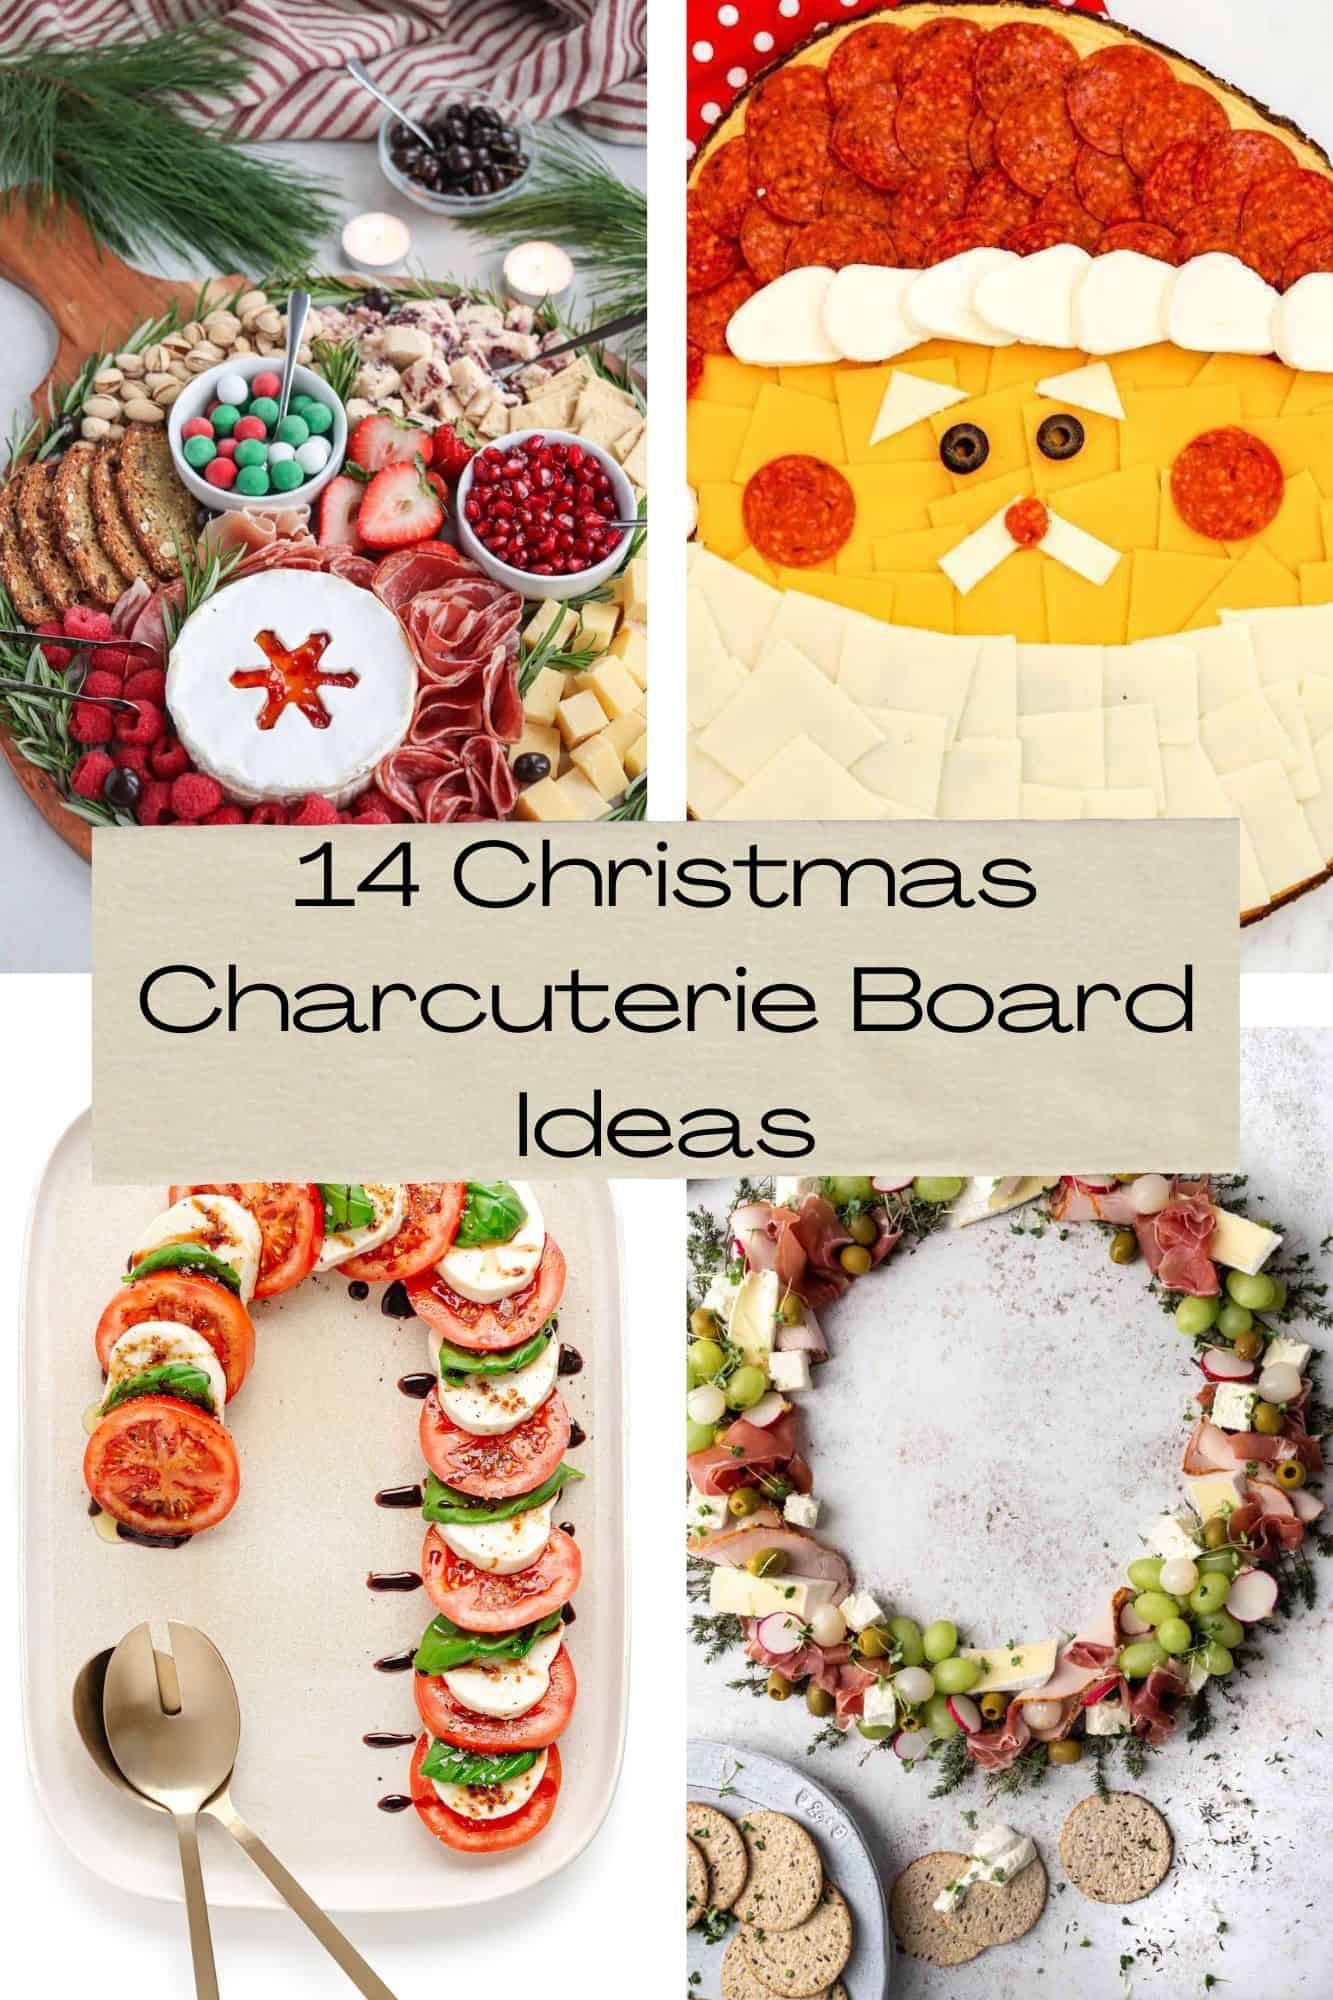 14 Delightful Christmas Charcuterie Board Ideas